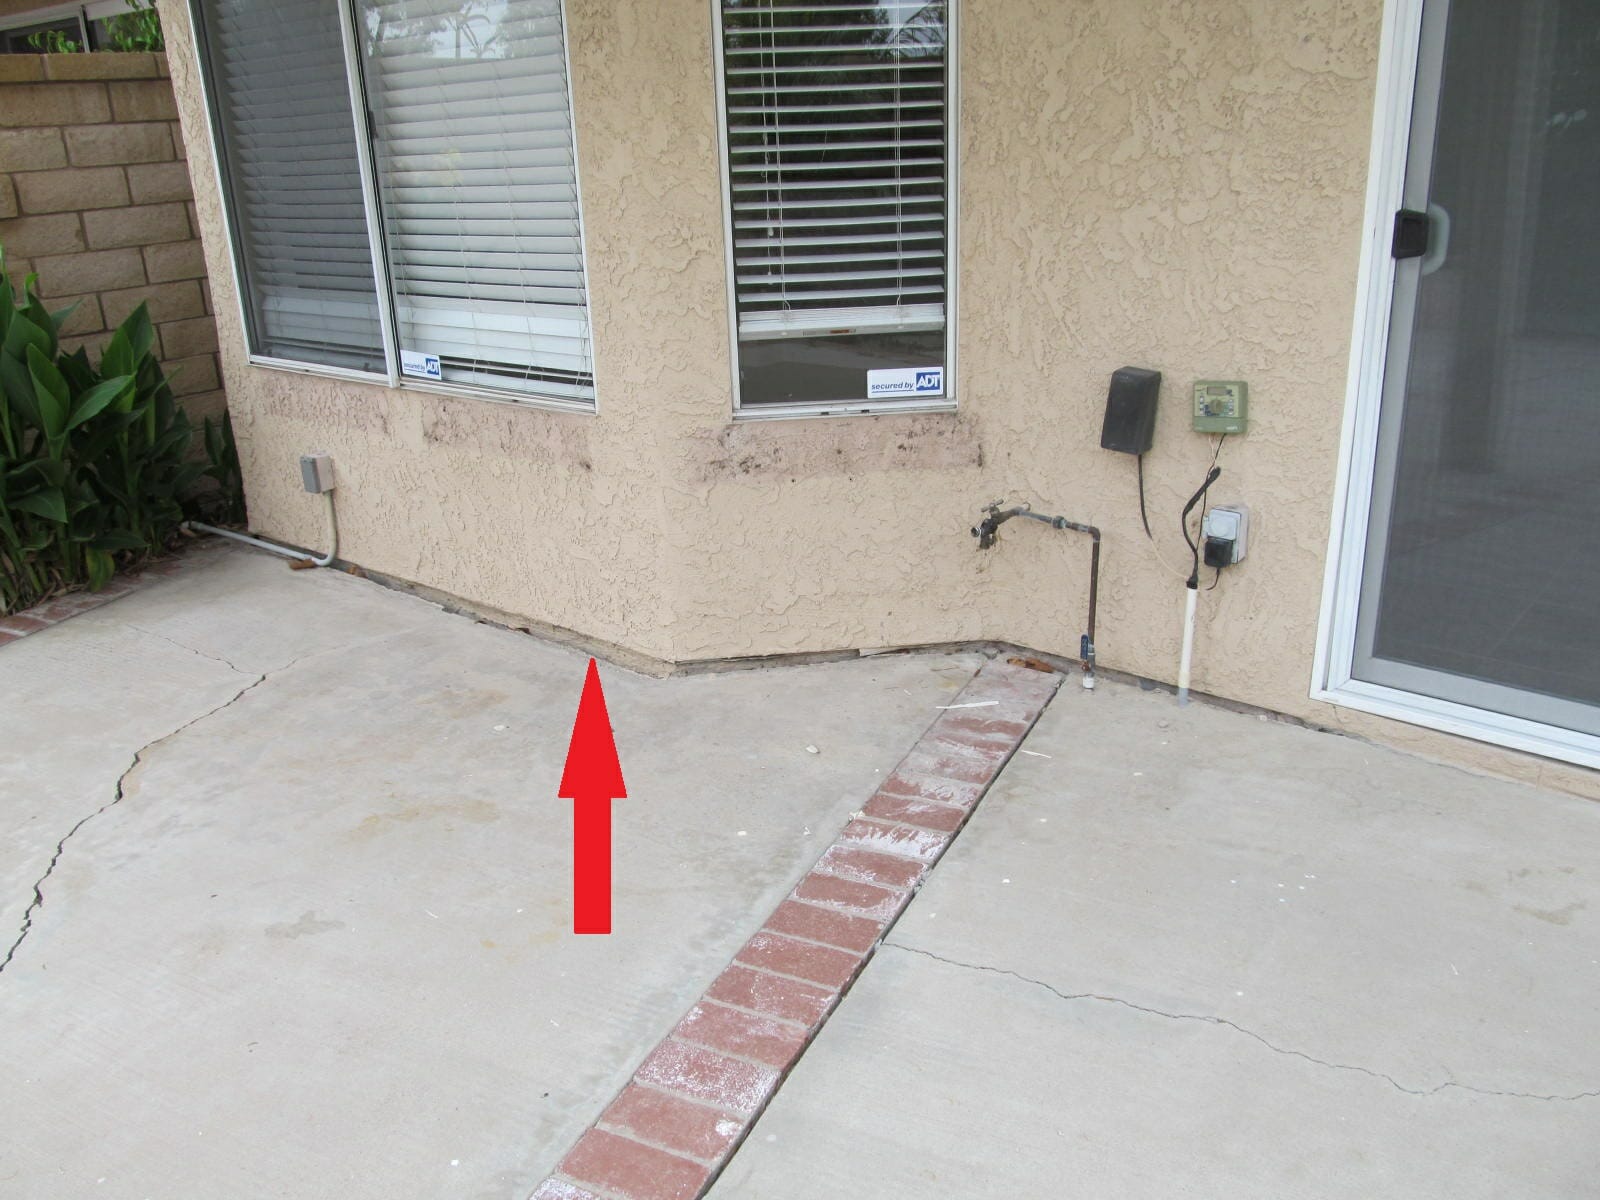 Slope creep evidenced by gap at patio slab